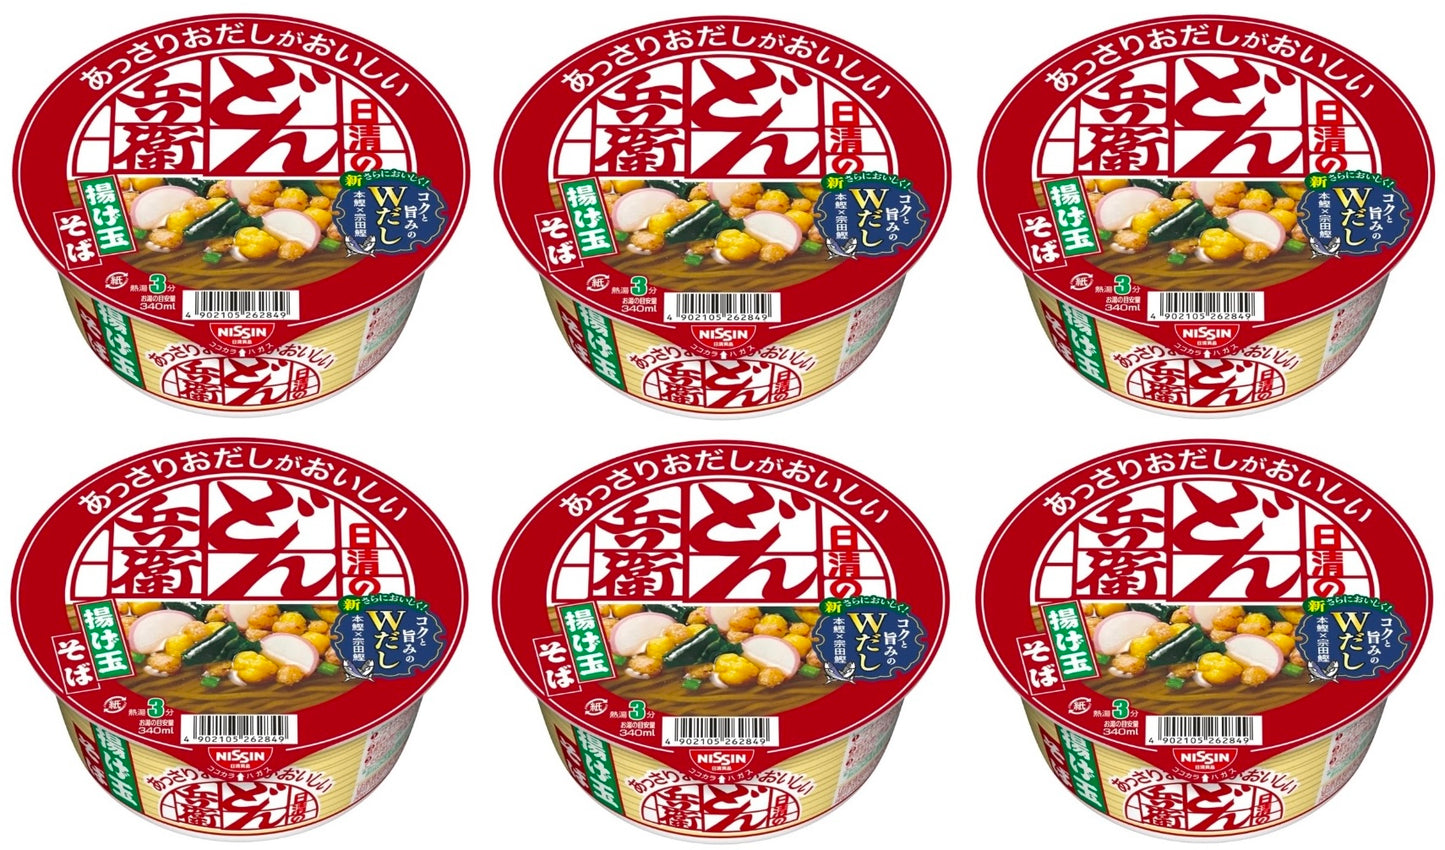 NISSIN Donbei Soba Noodles Tempura Bits Soy Sauce Soup Instant Cup Japanese 70g